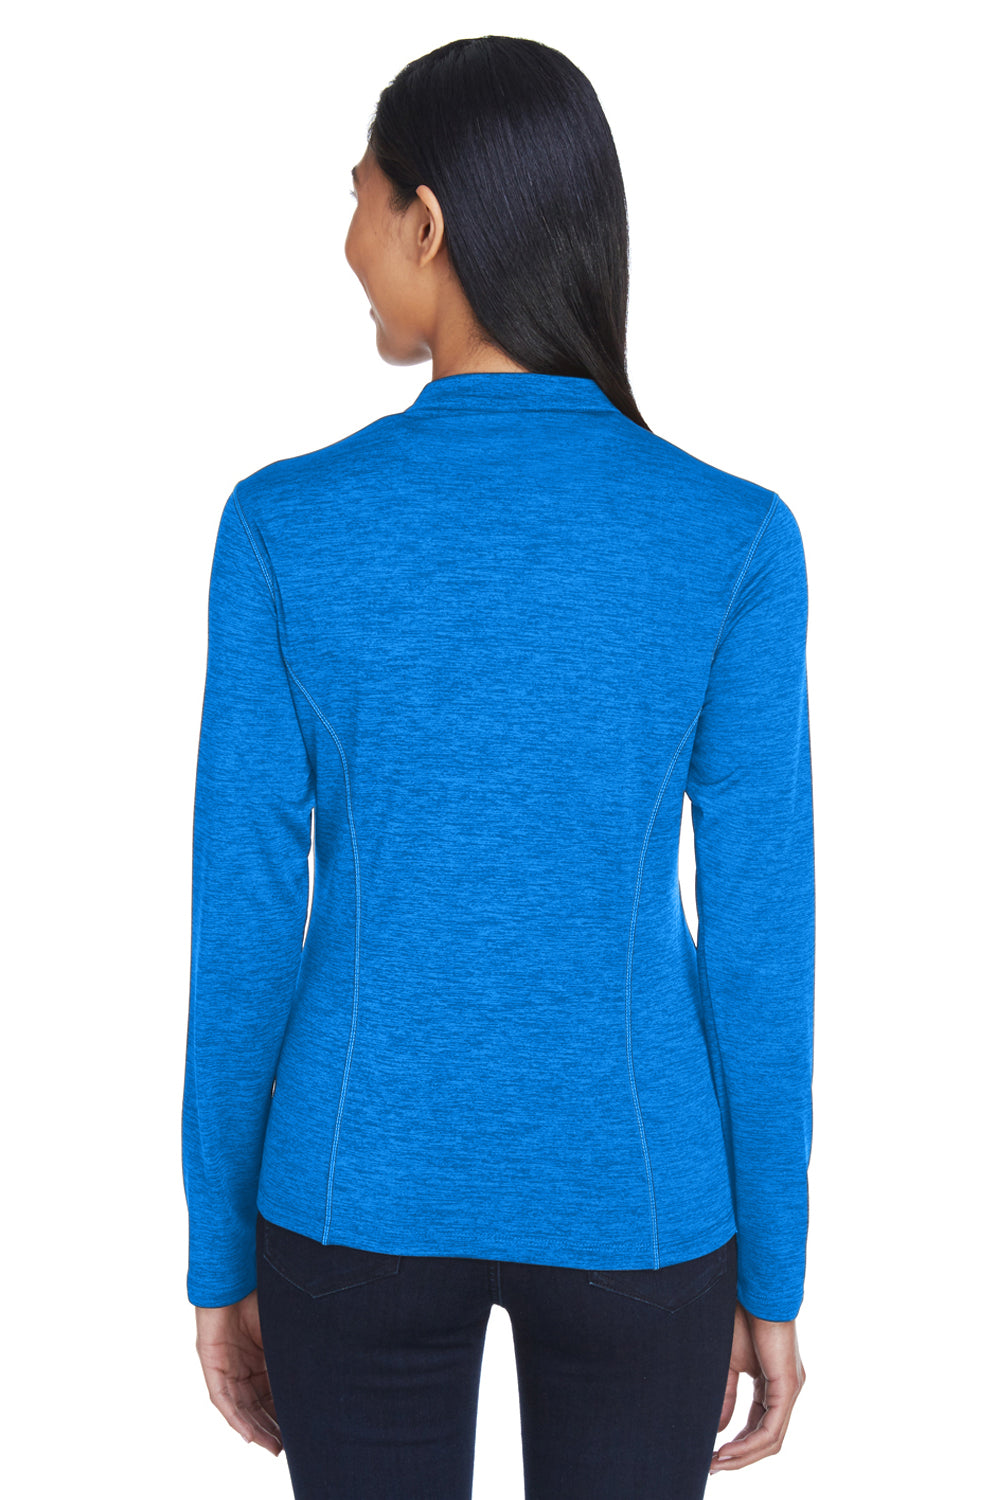 Core 365 CE401W Womens Kinetic Performance Moisture Wicking 1/4 Zip Sweatshirt Royal Blue/Carbon Grey Back